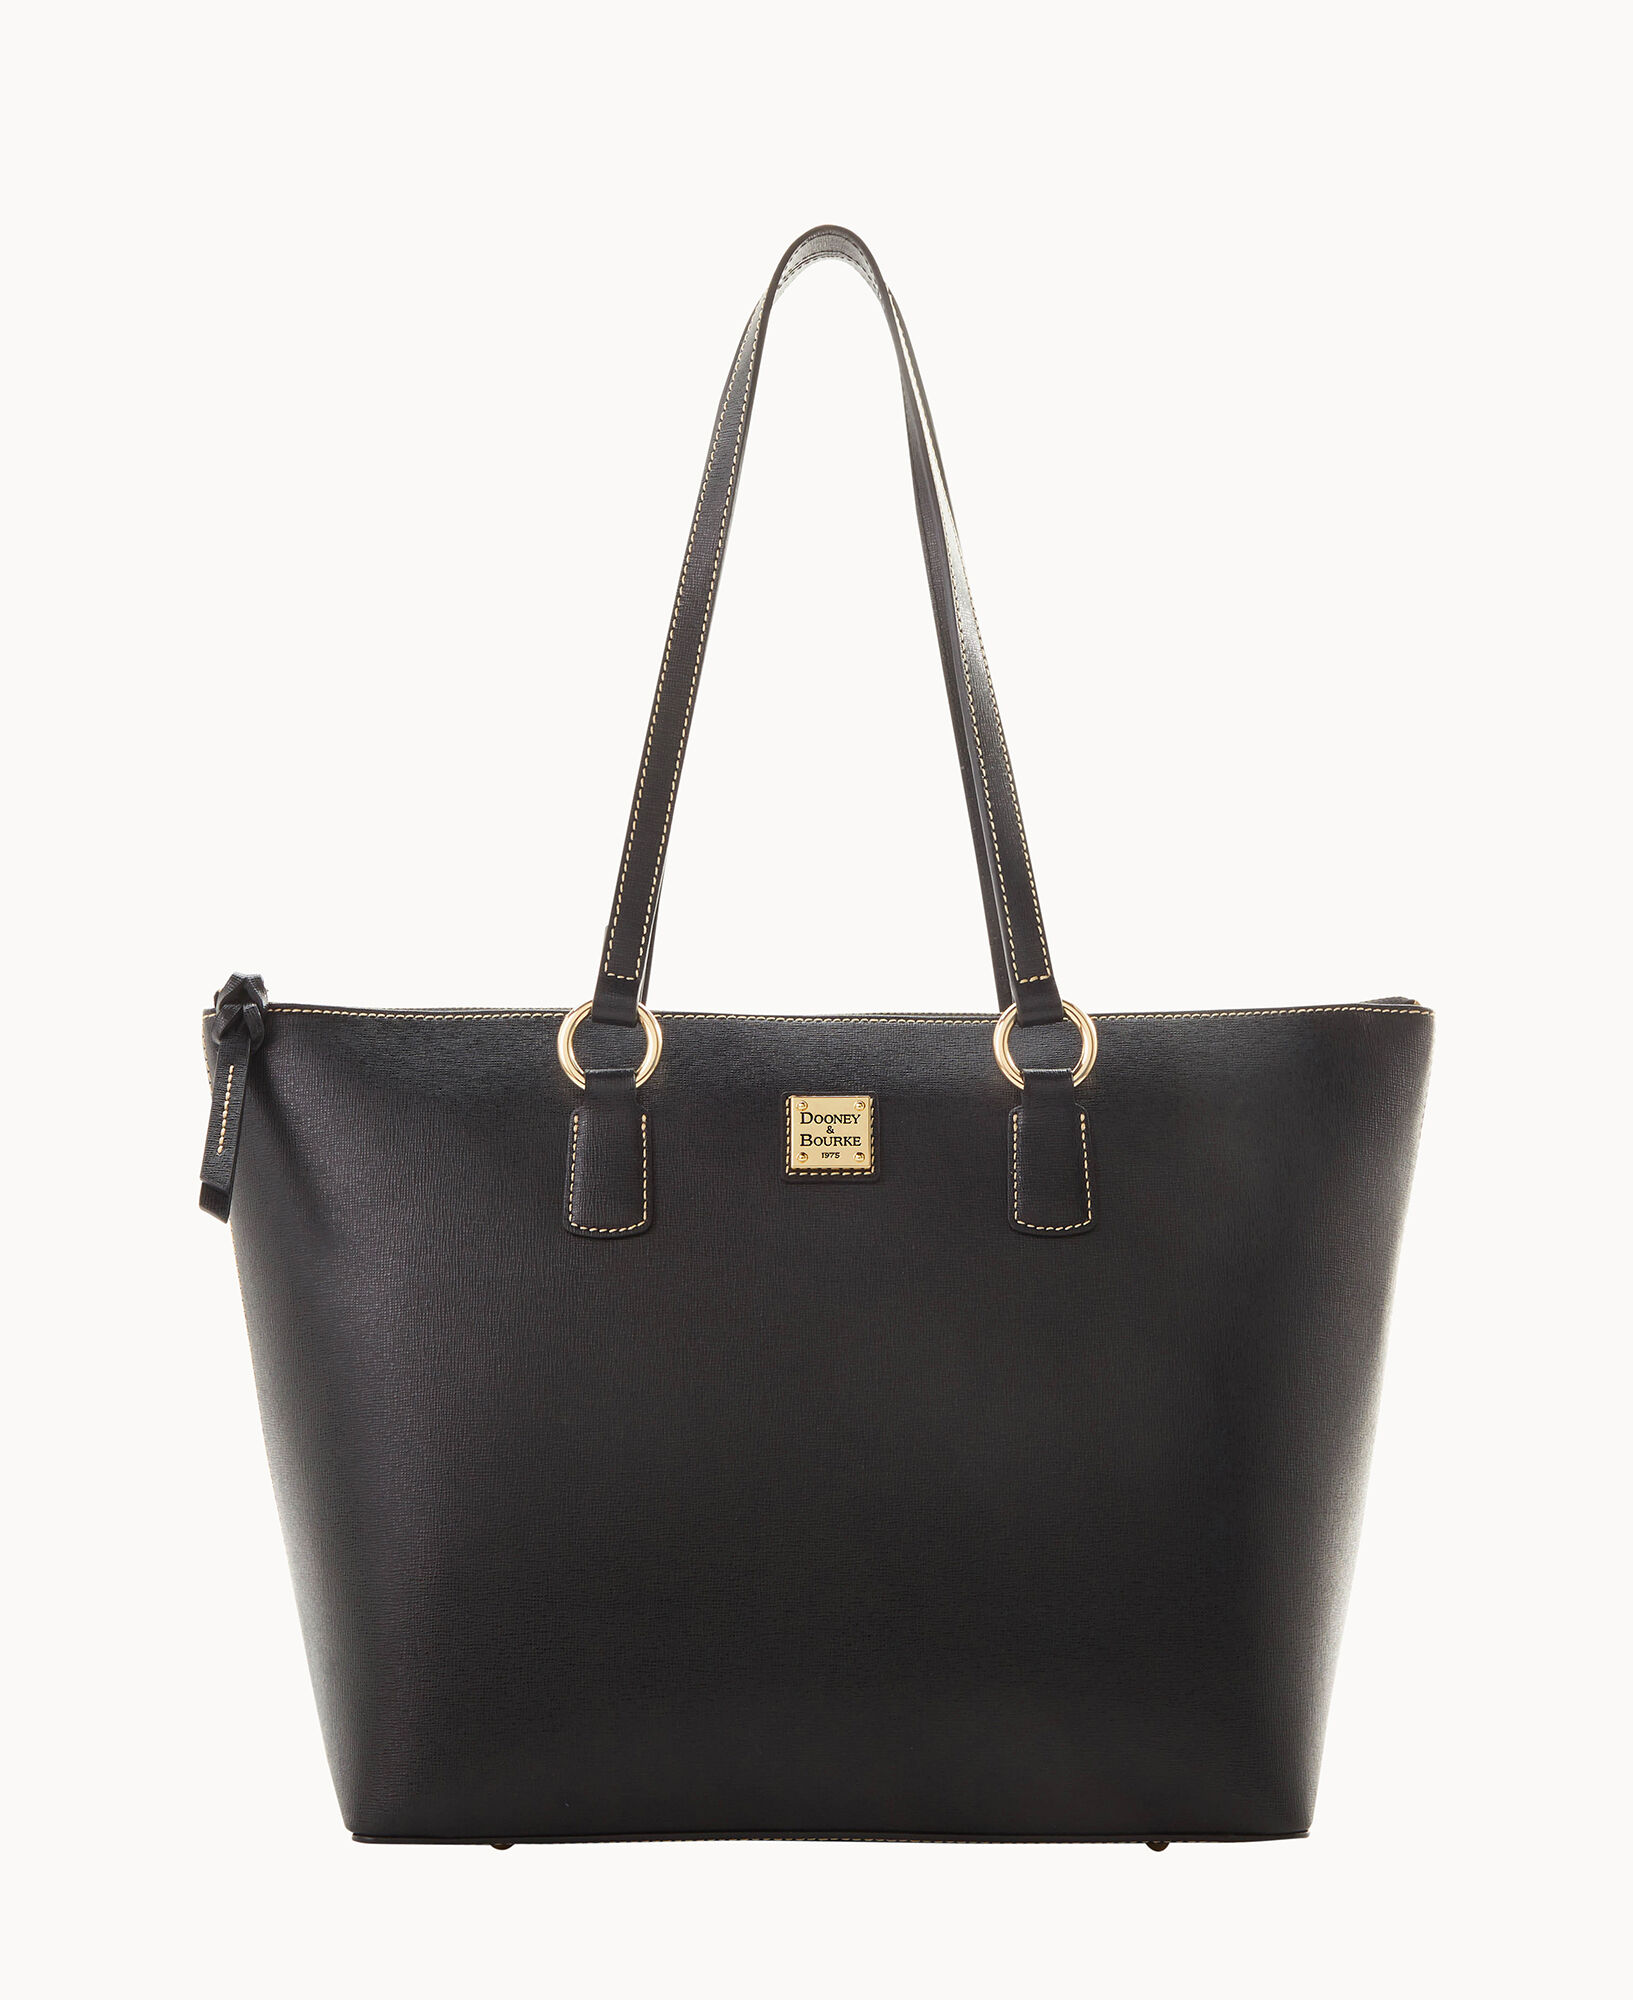 Lady Leather Handbag Bag Computer Bag Ms Senior Bag Purse/Wallet